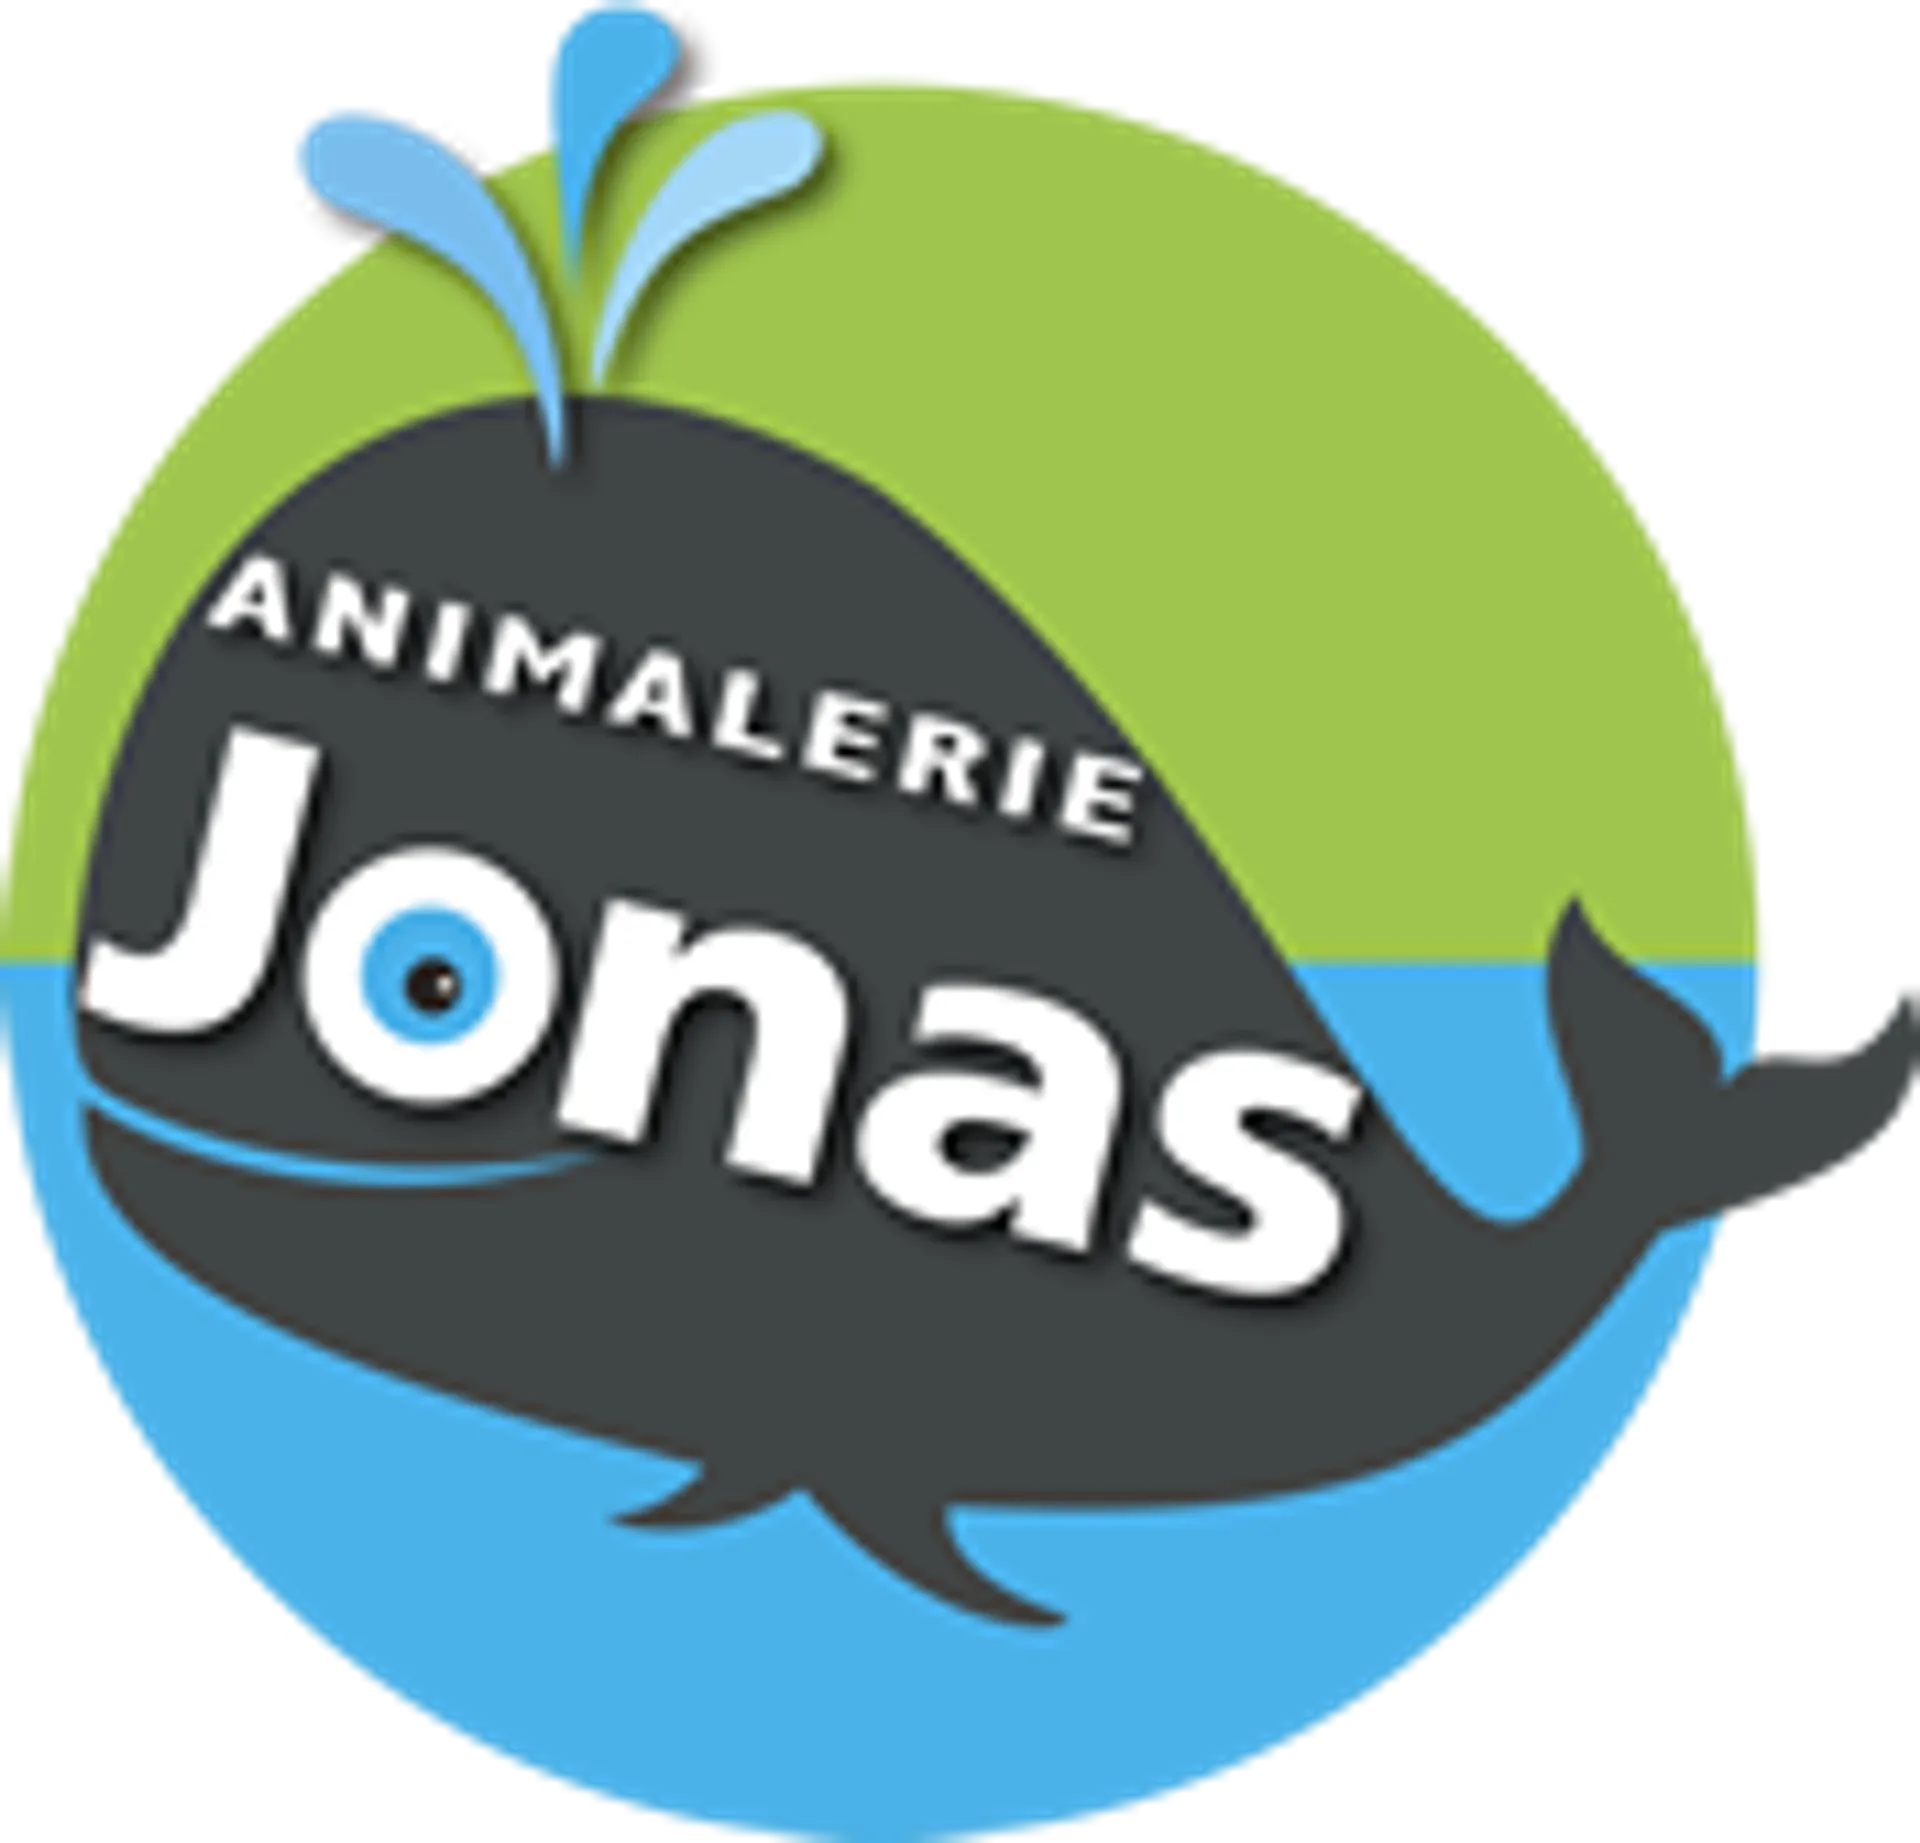 ANIMALERIE JONAS logo de circulaires